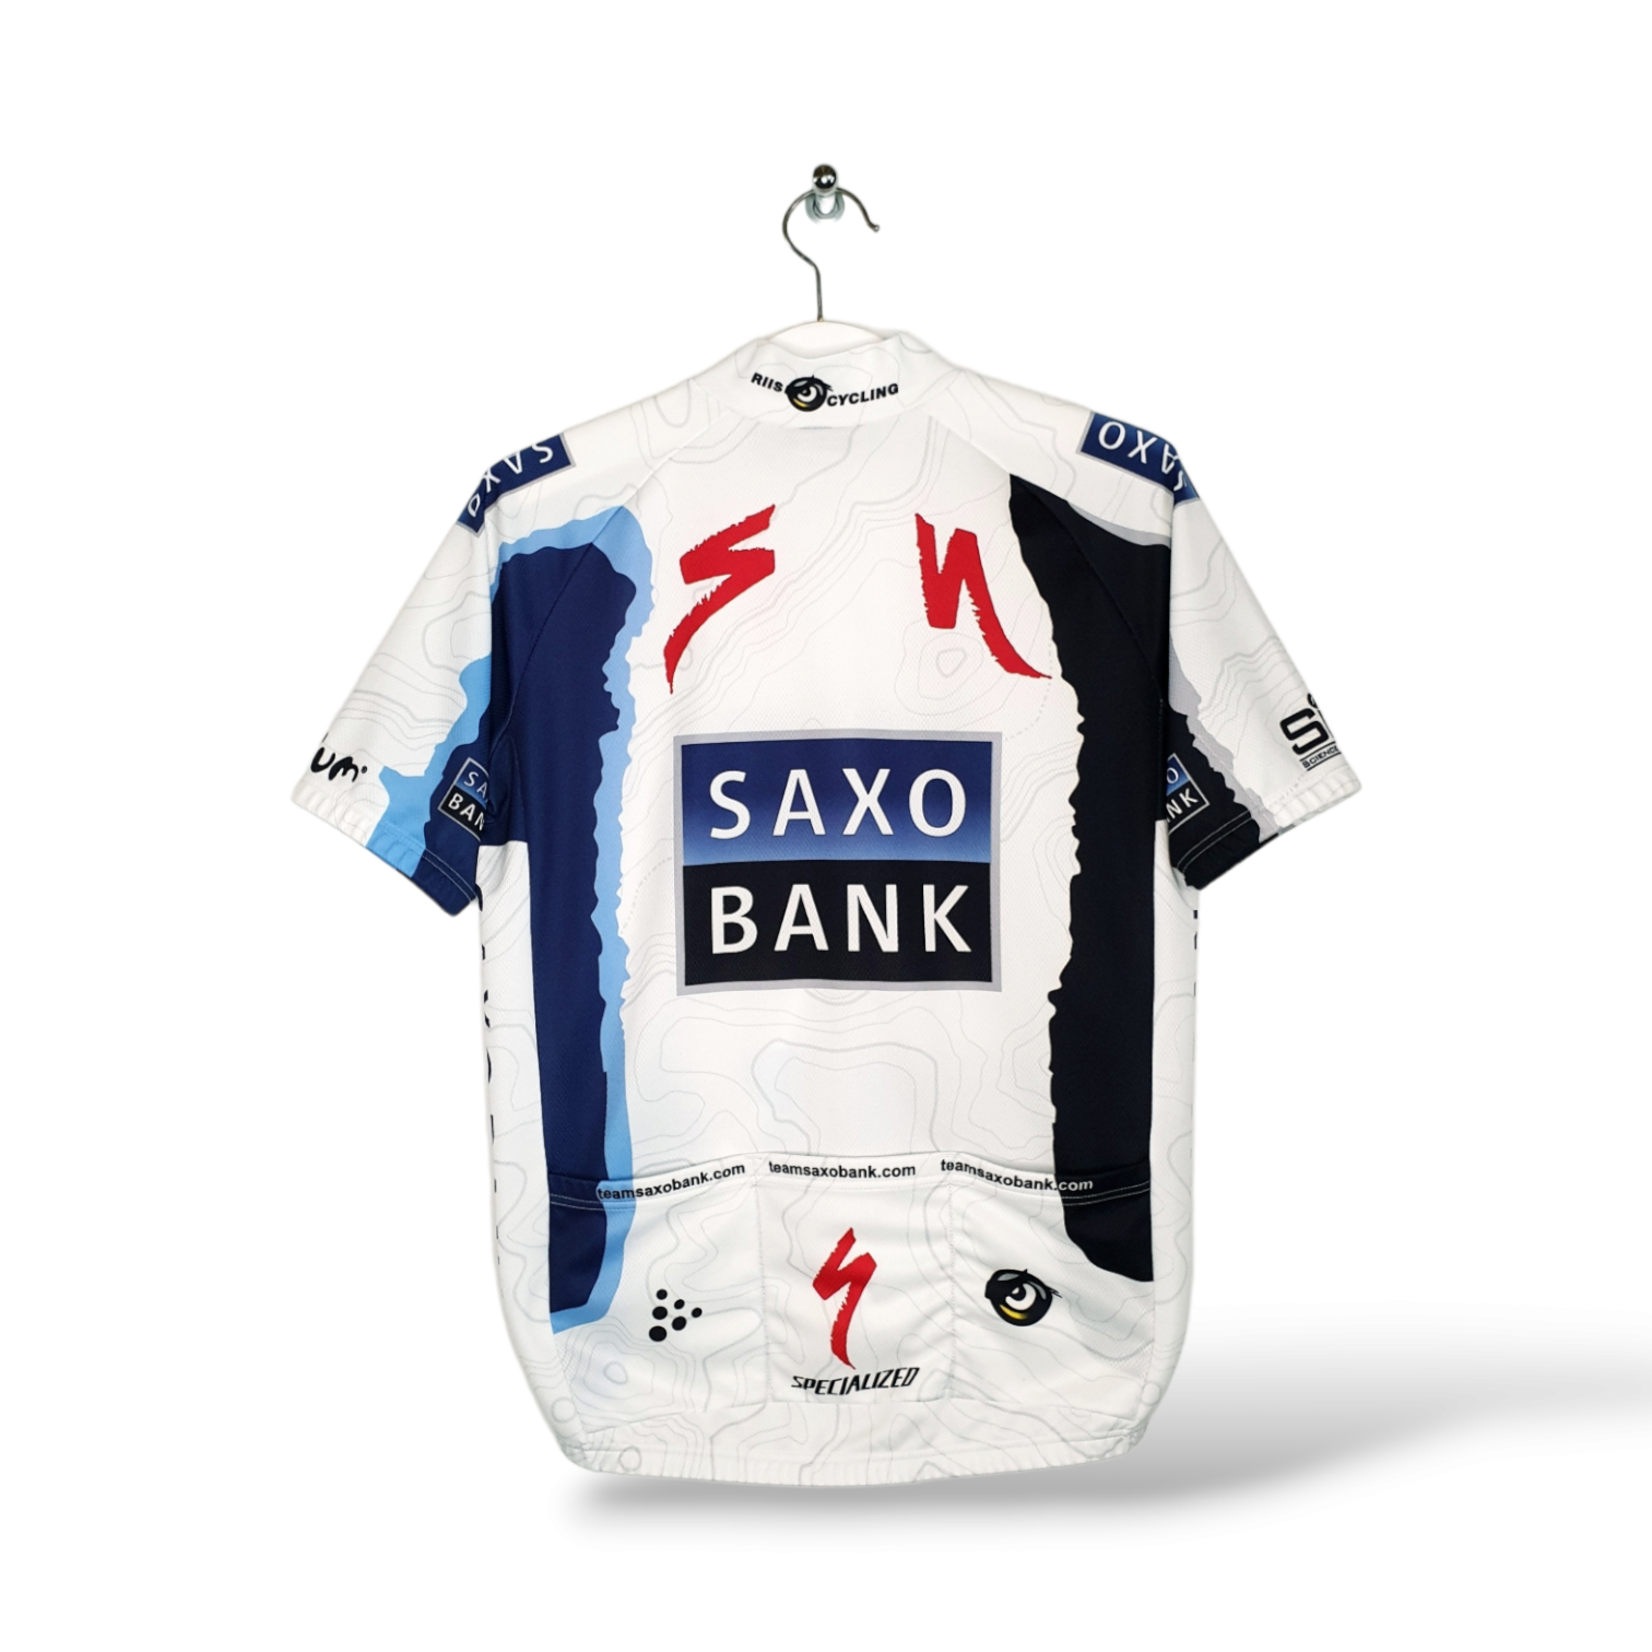 Craft Origineel Craft vintage wielershirt Team Saxo Bank 2009